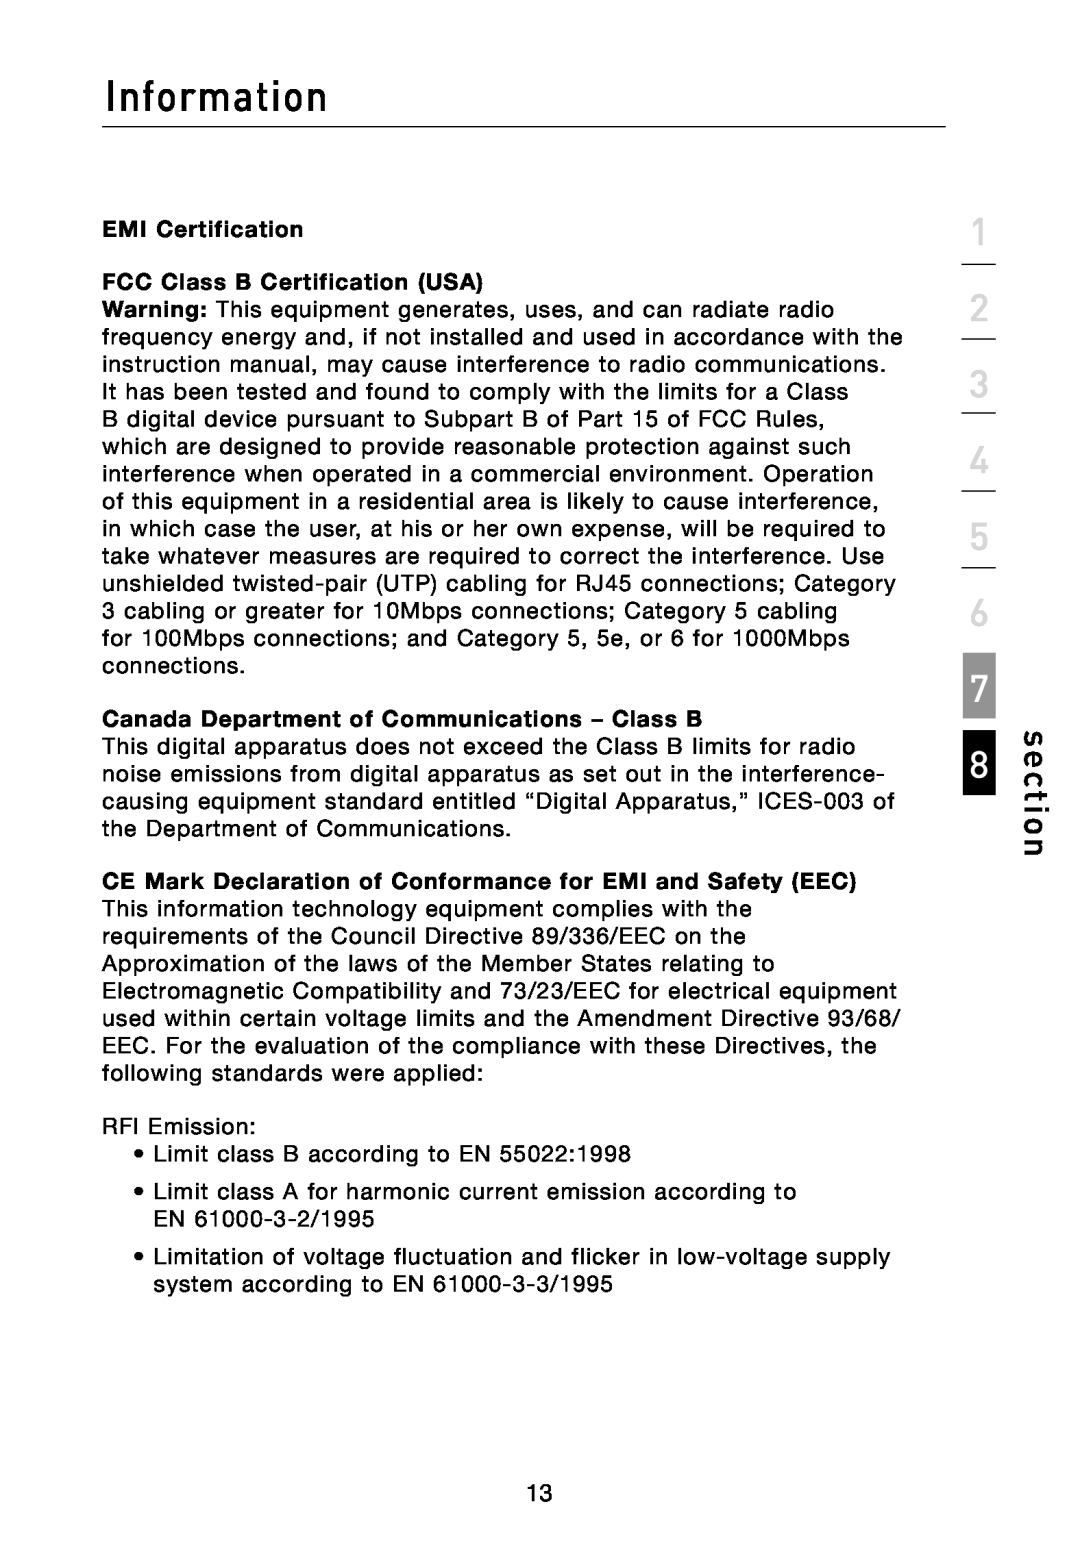 Belkin F5D5141-5 manual Information, section, EMI Certification FCC Class B Certification USA 